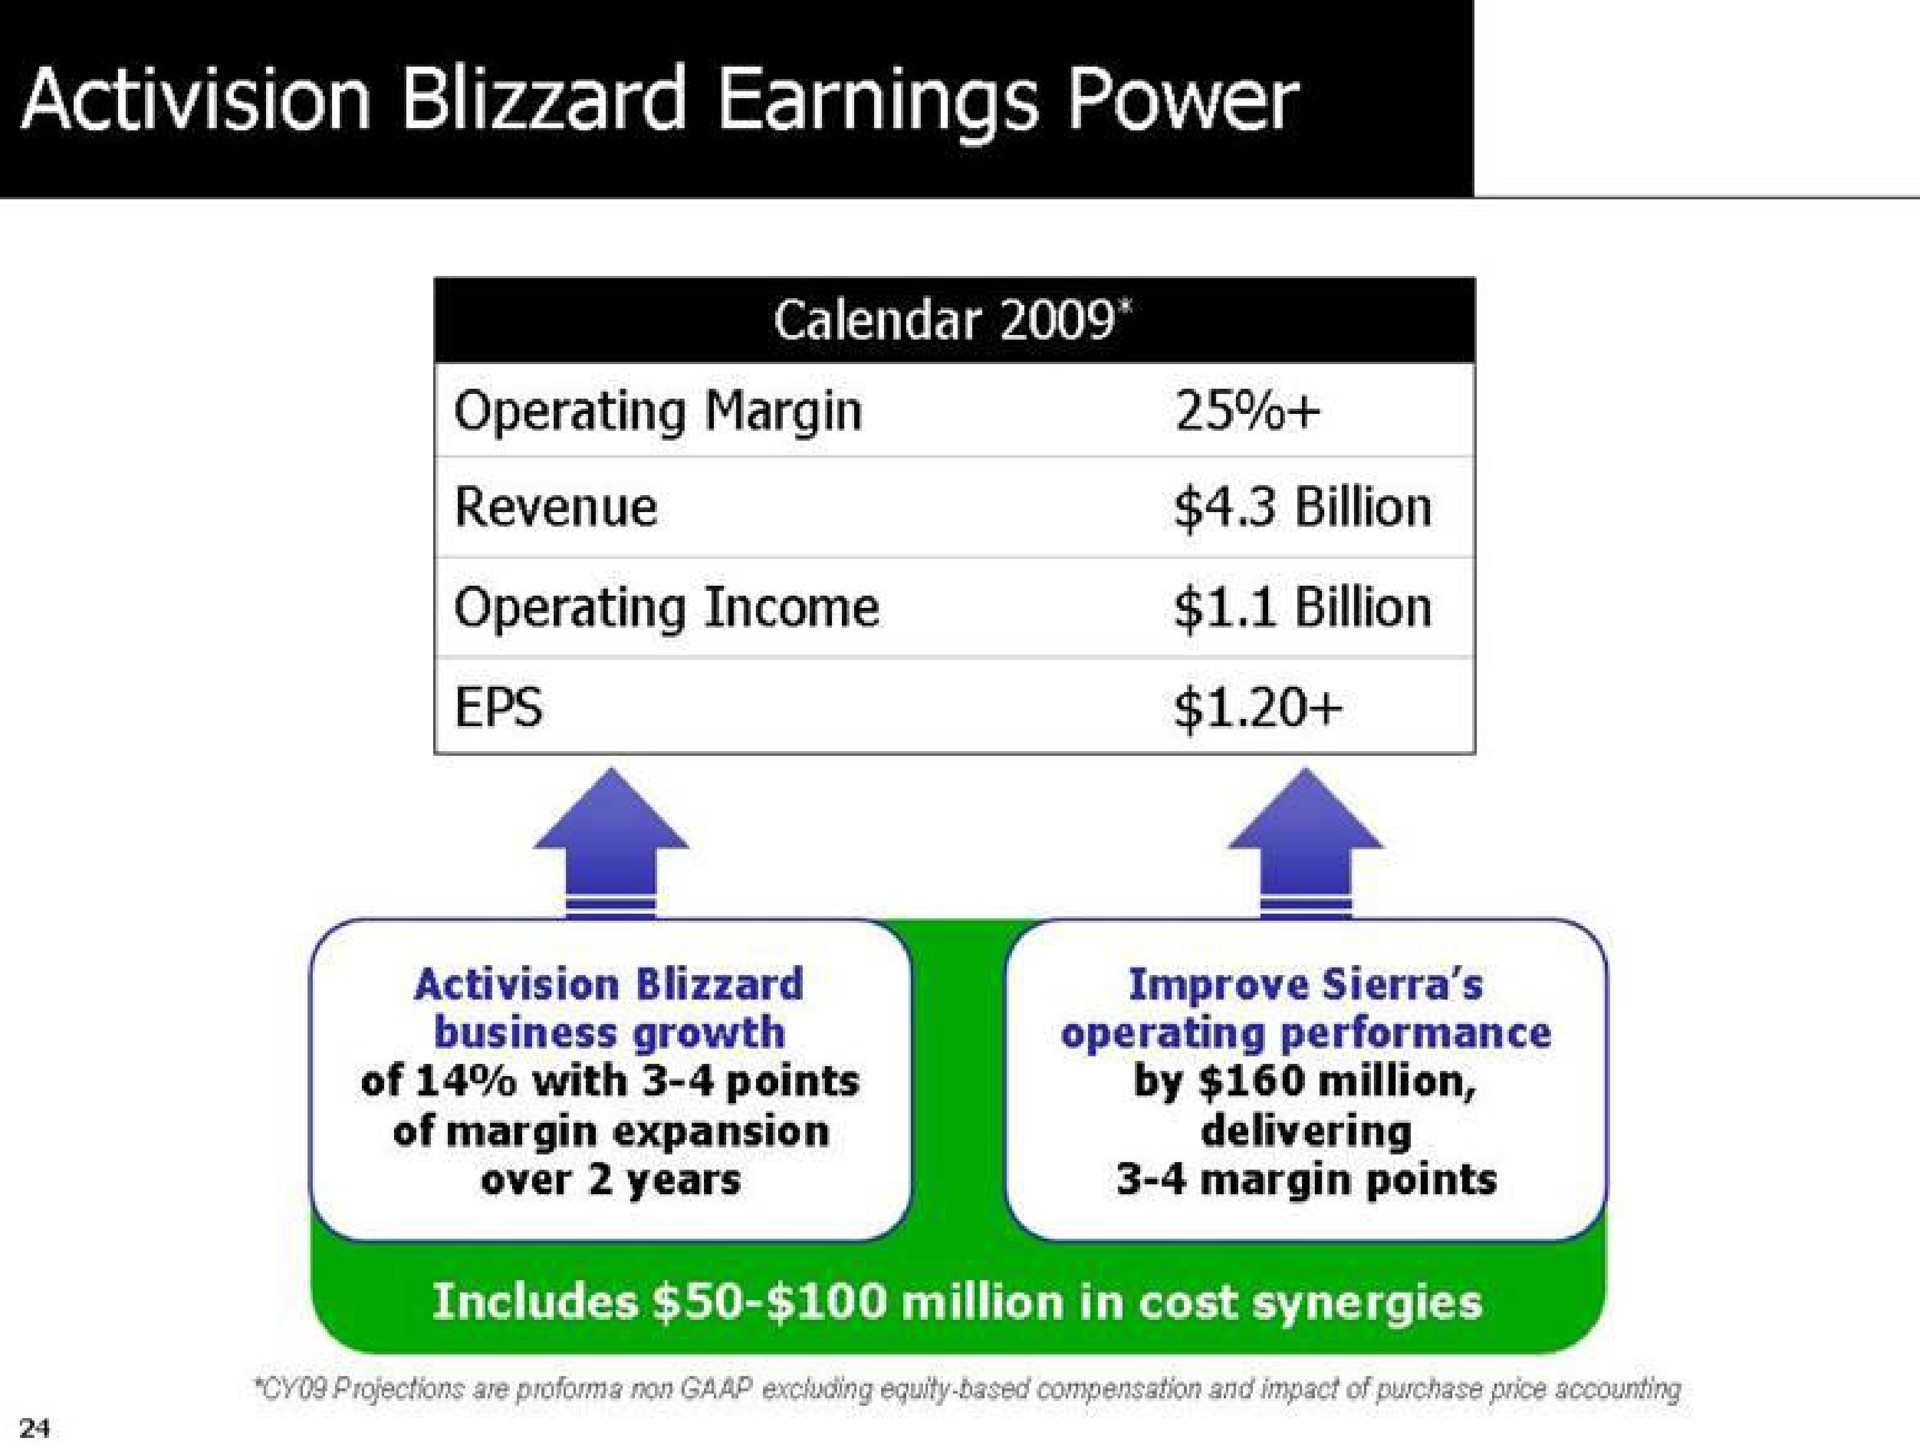 blizzard earnings power | Activision Blizzard